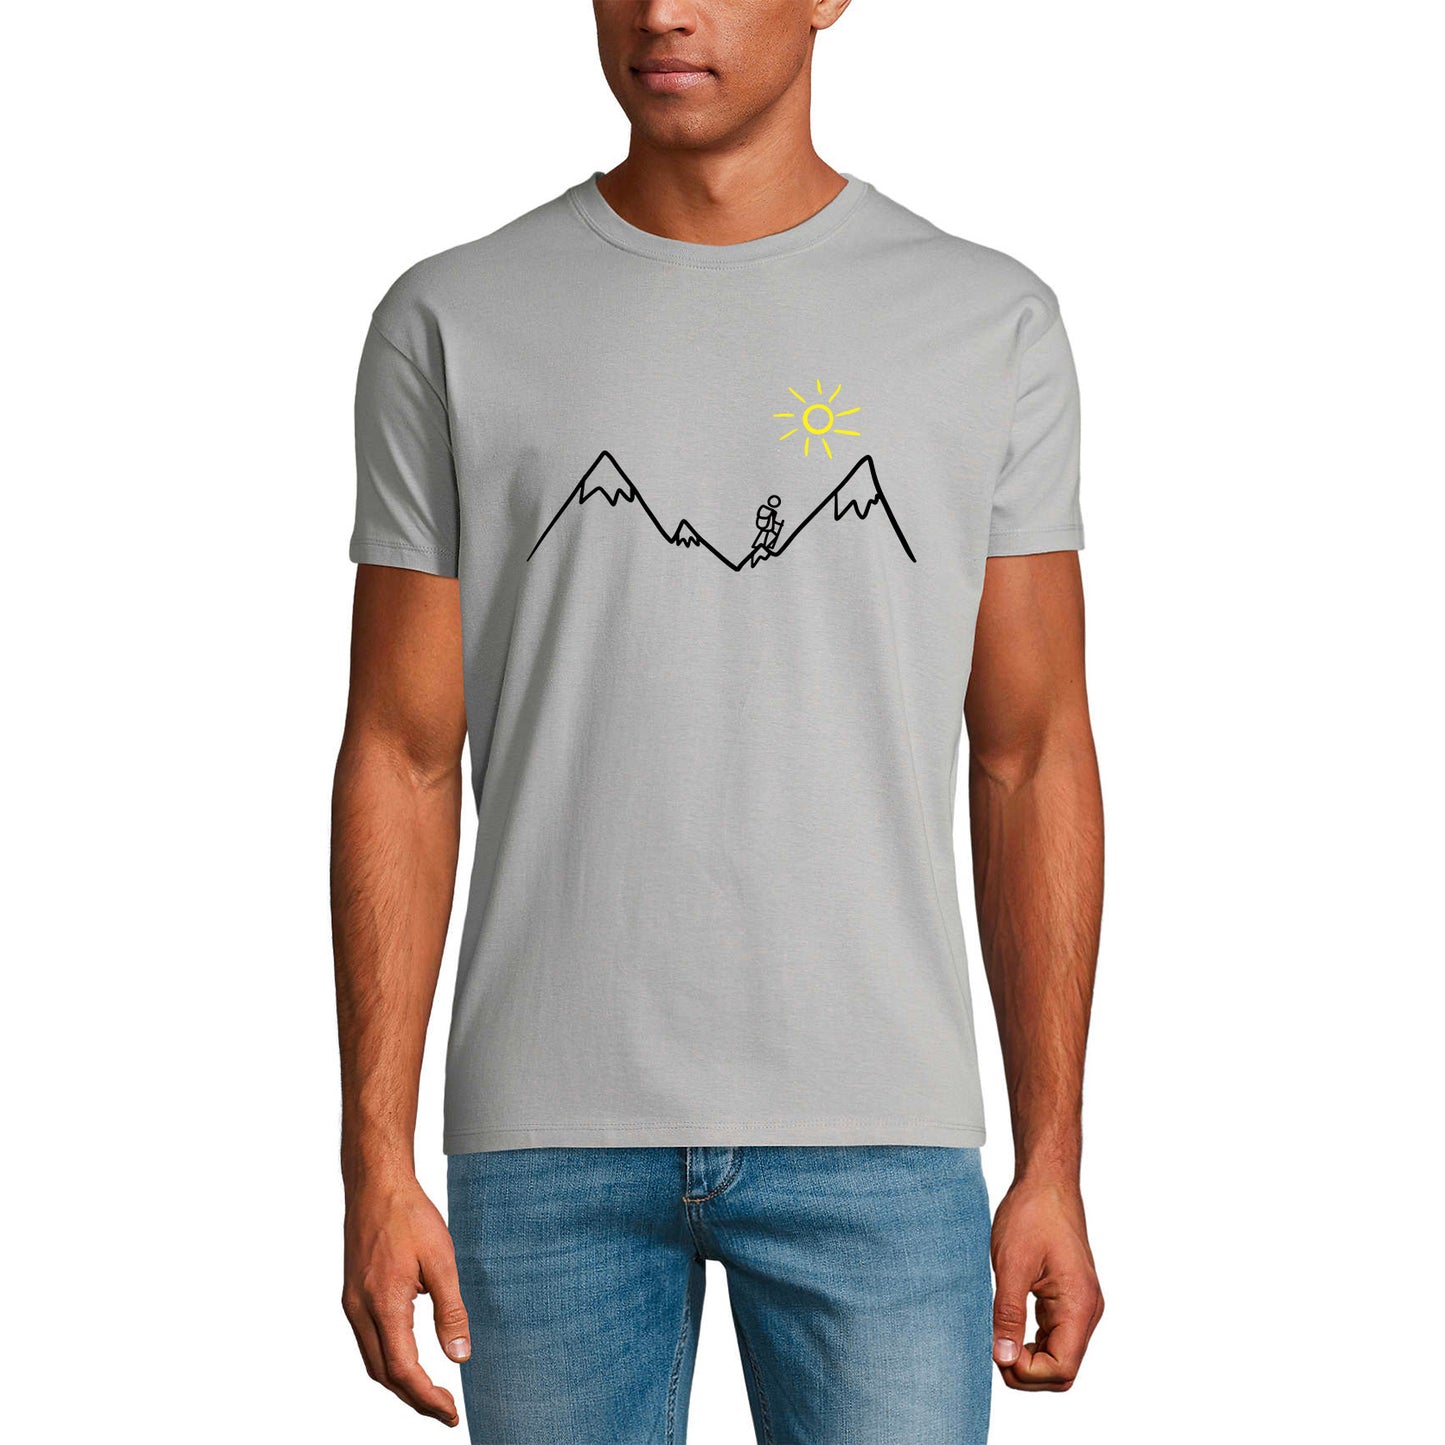 ULTRABASIC Men's Novelty T-Shirt Cool Hiking - Mountain Hiker Tee Shirt